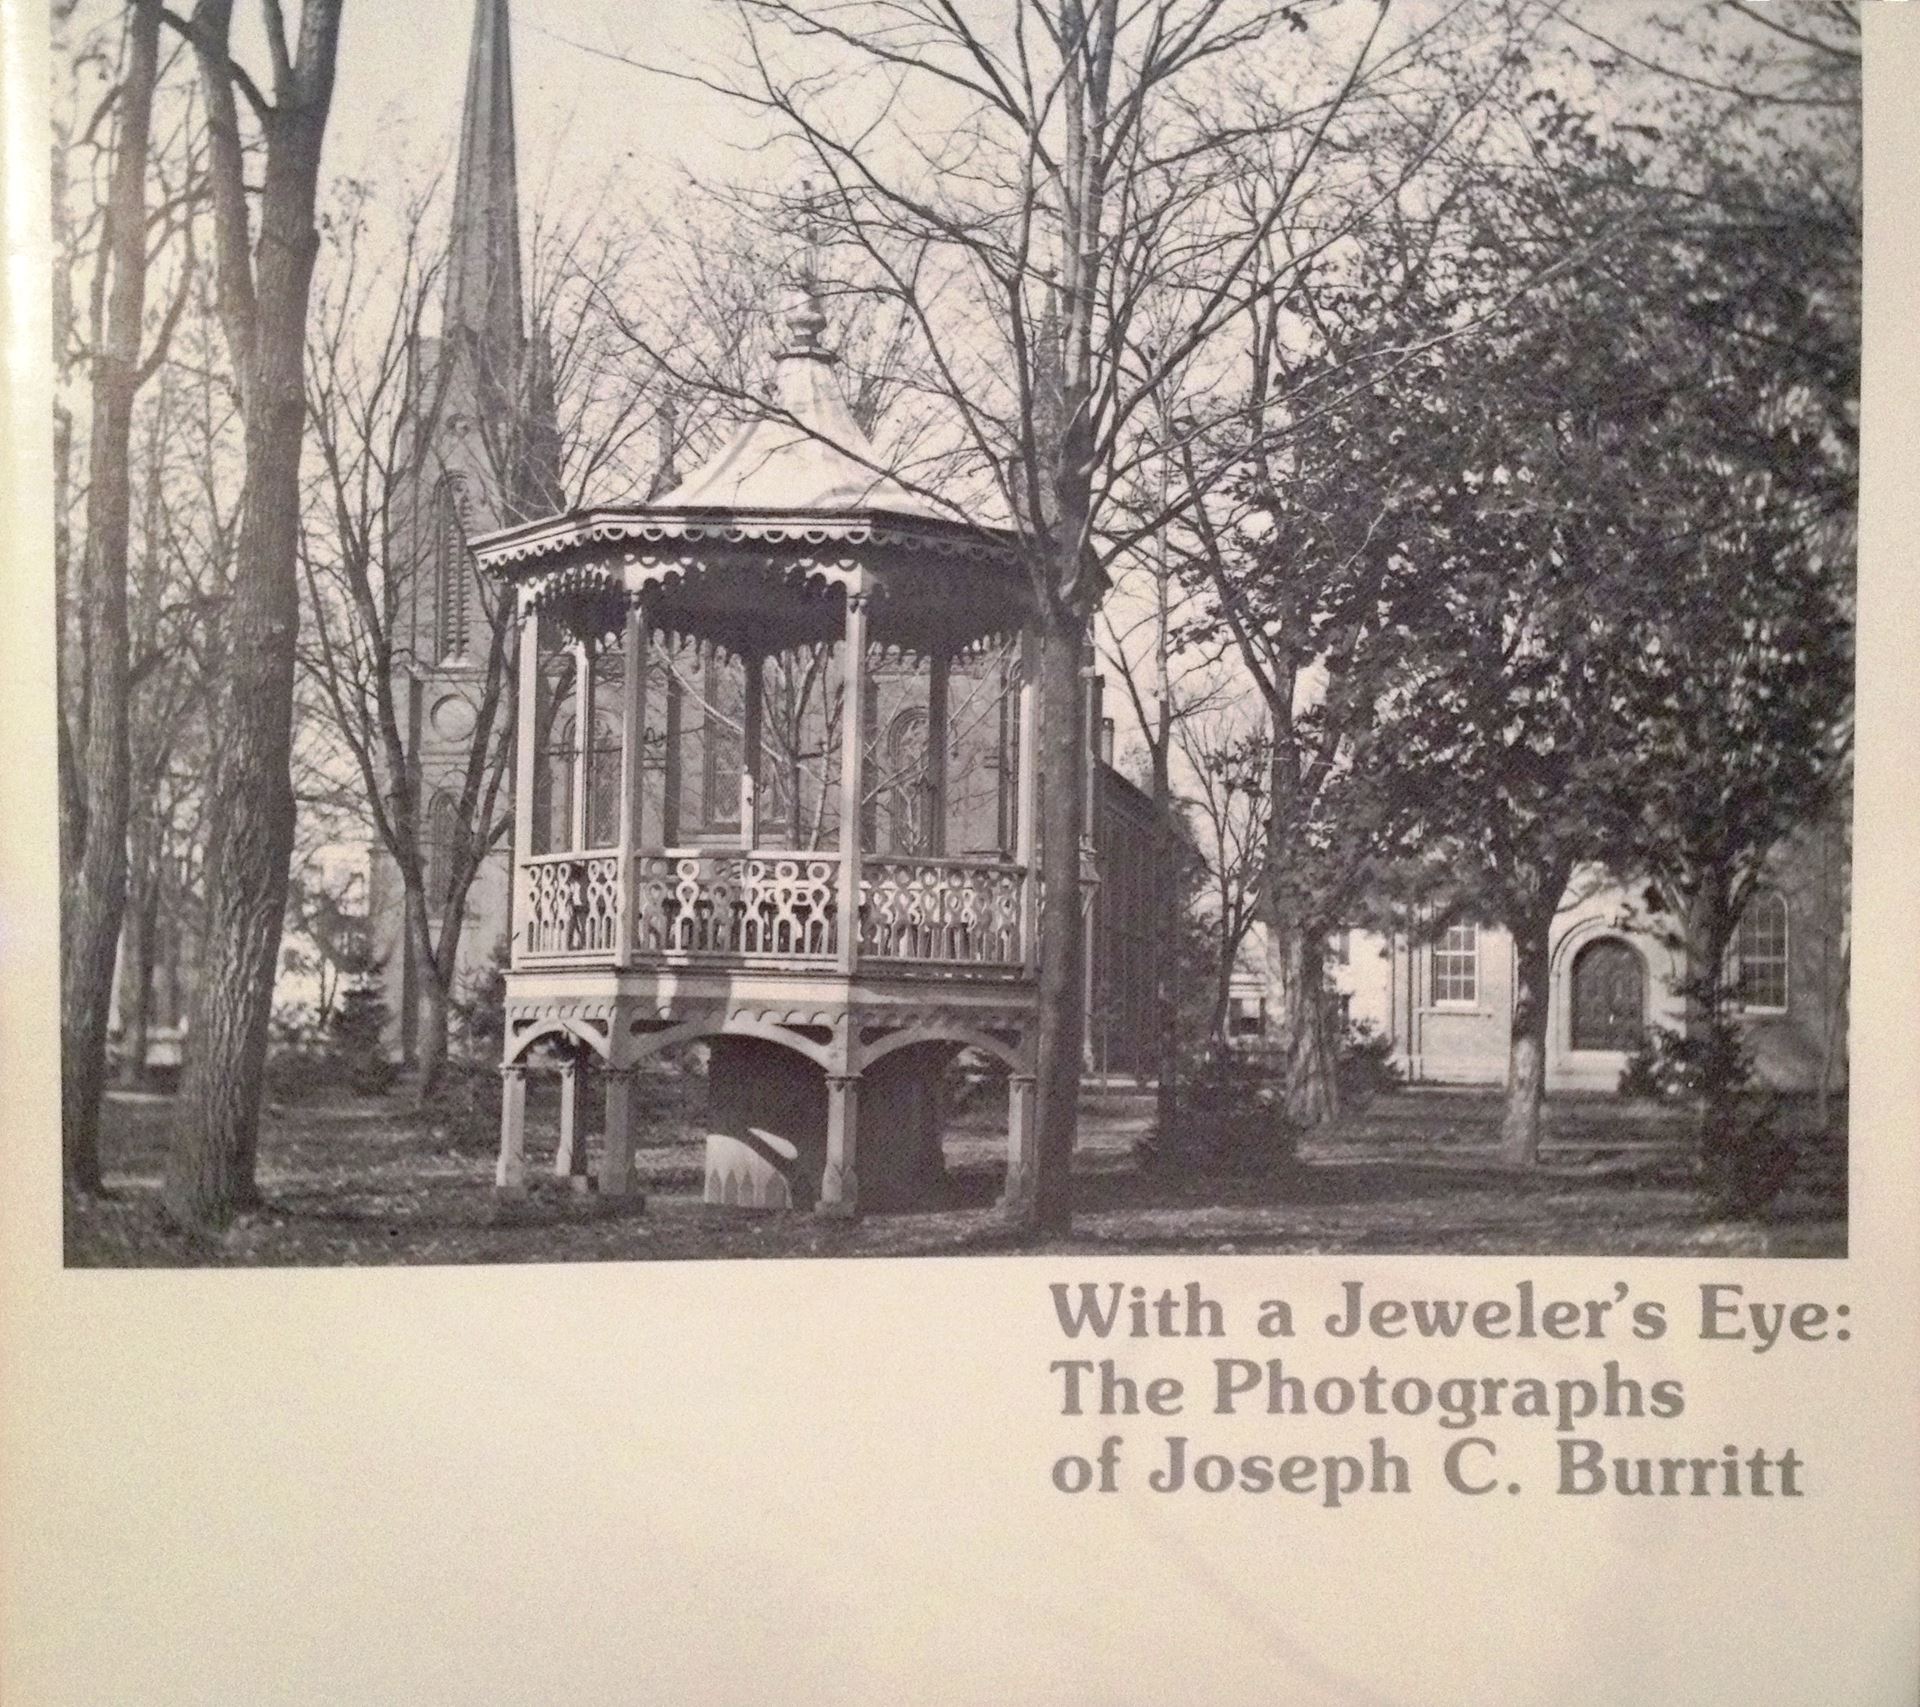 With a Jewelers Eye: The Photographs of Joseph C. Burritt